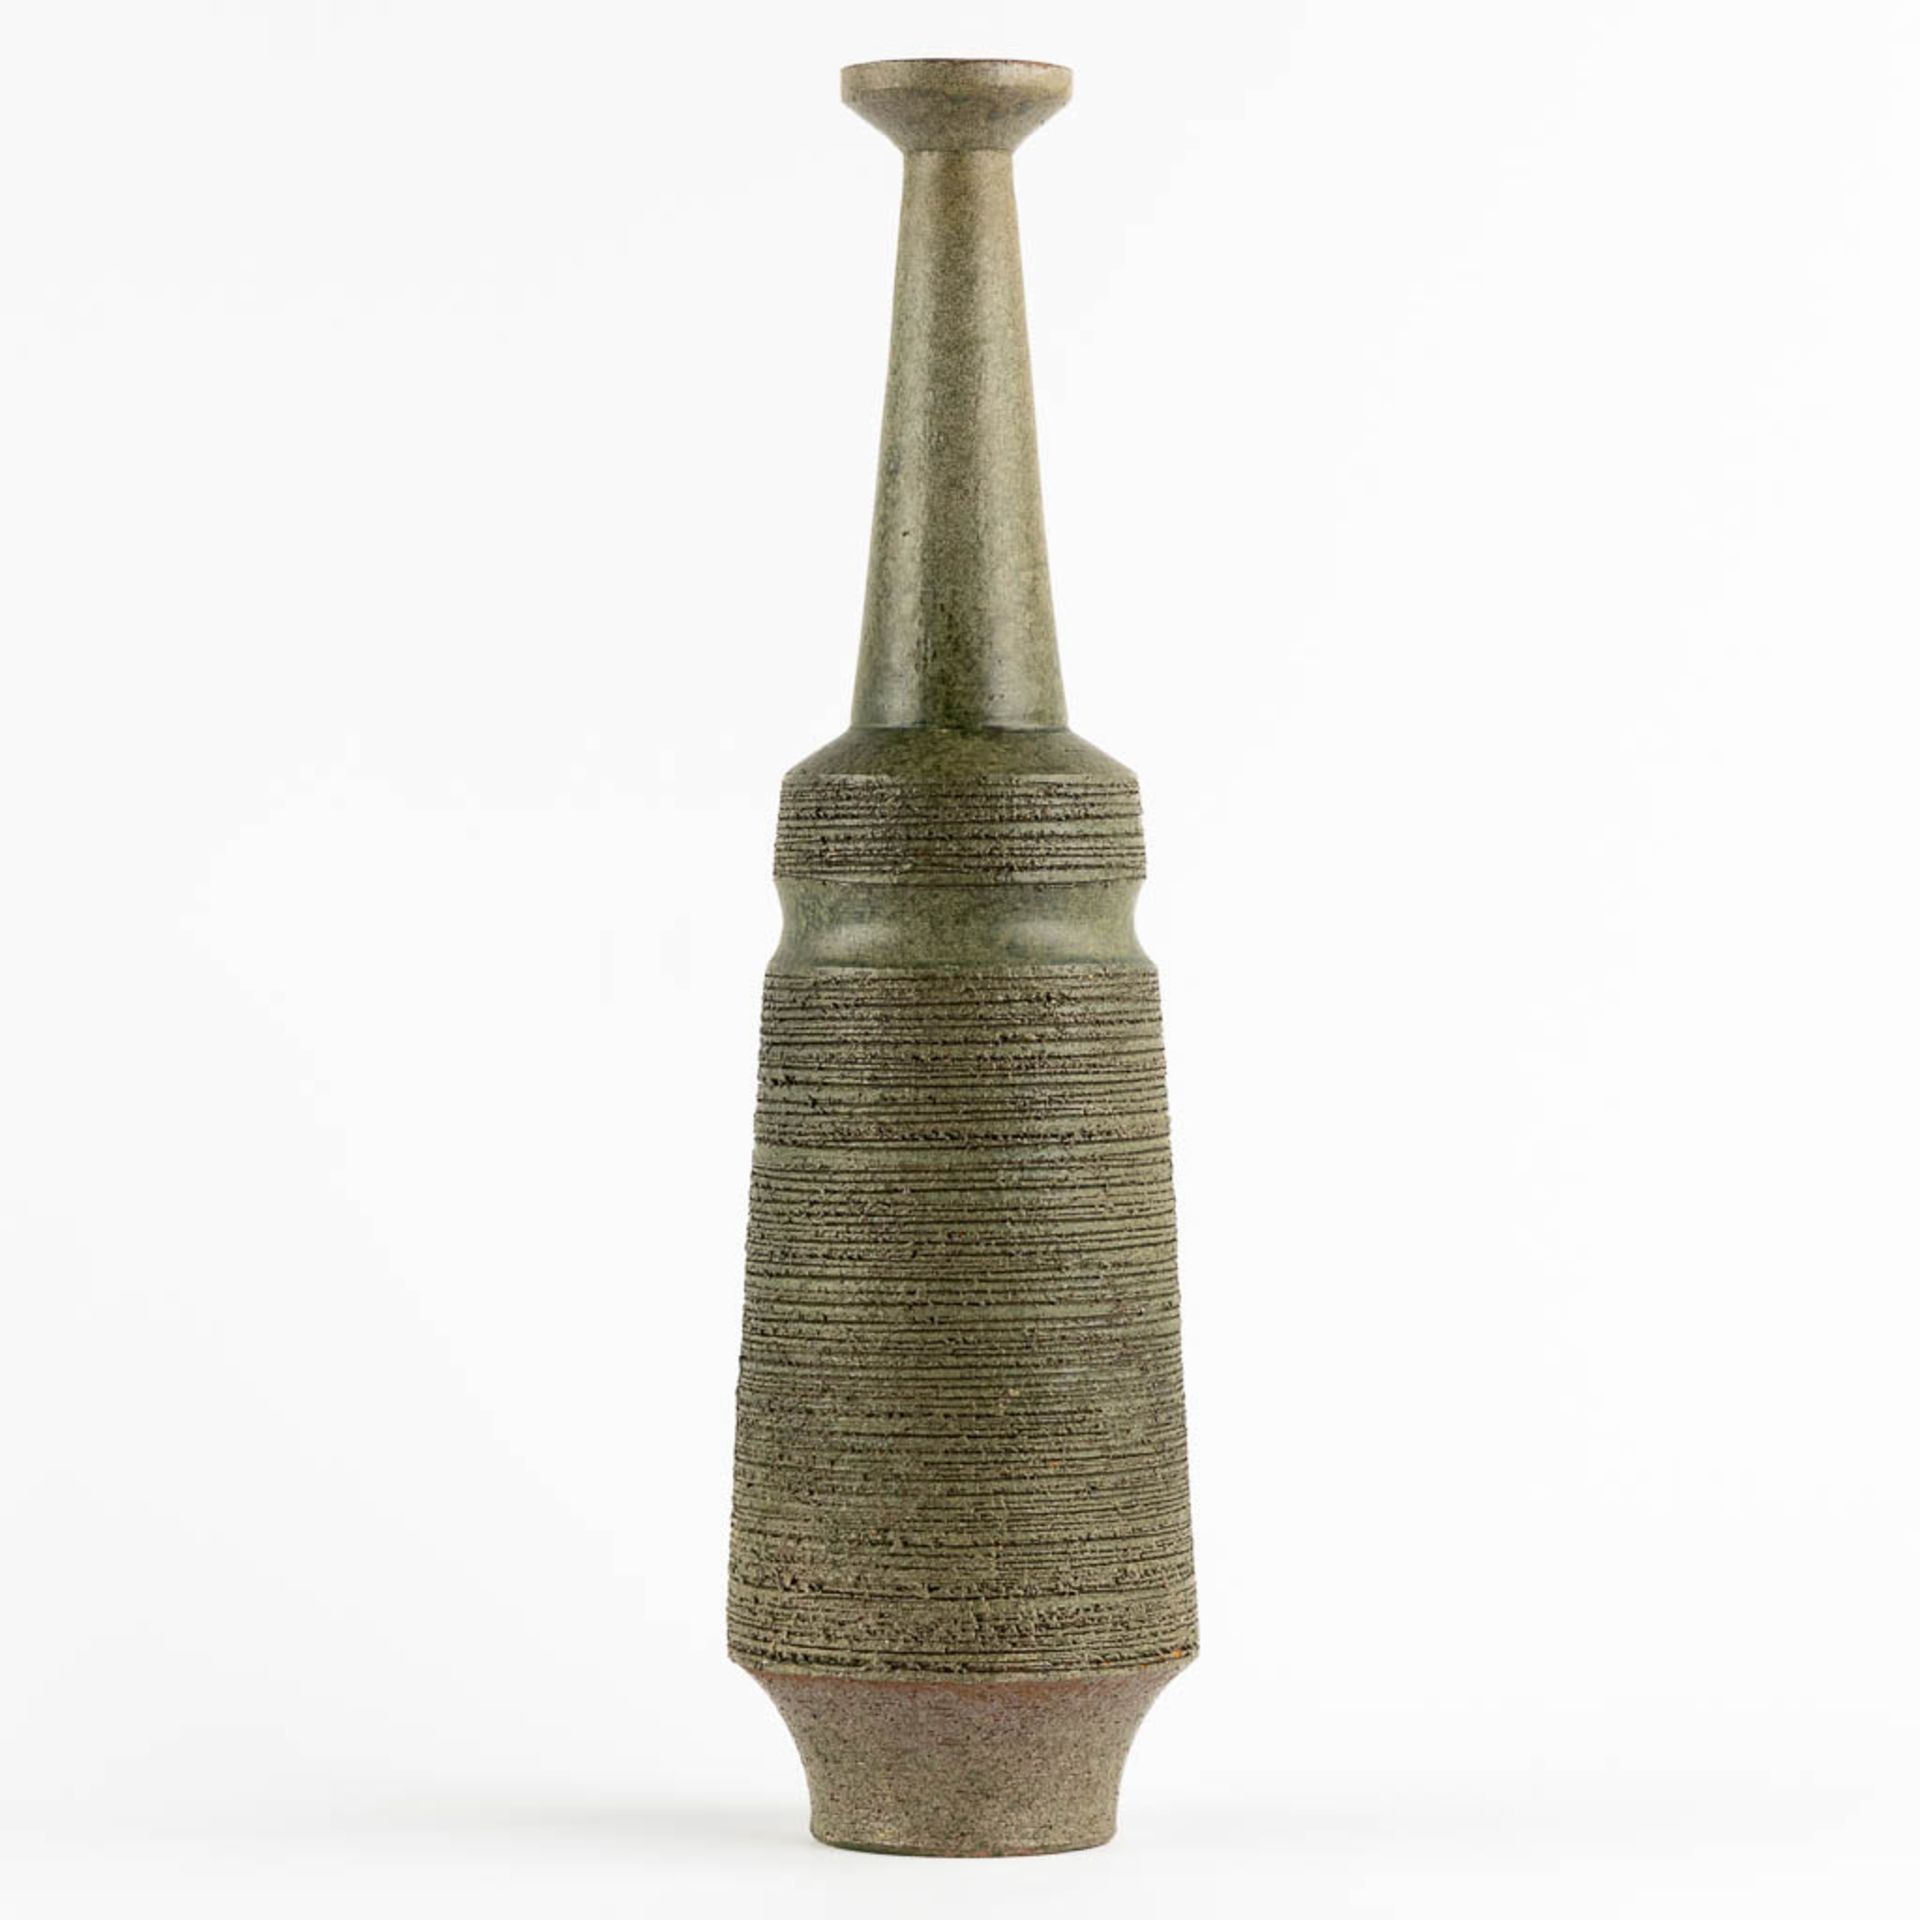 Amphora or Keramar, a large green vase, glazed ceramics. (H:53 x D:14 cm)